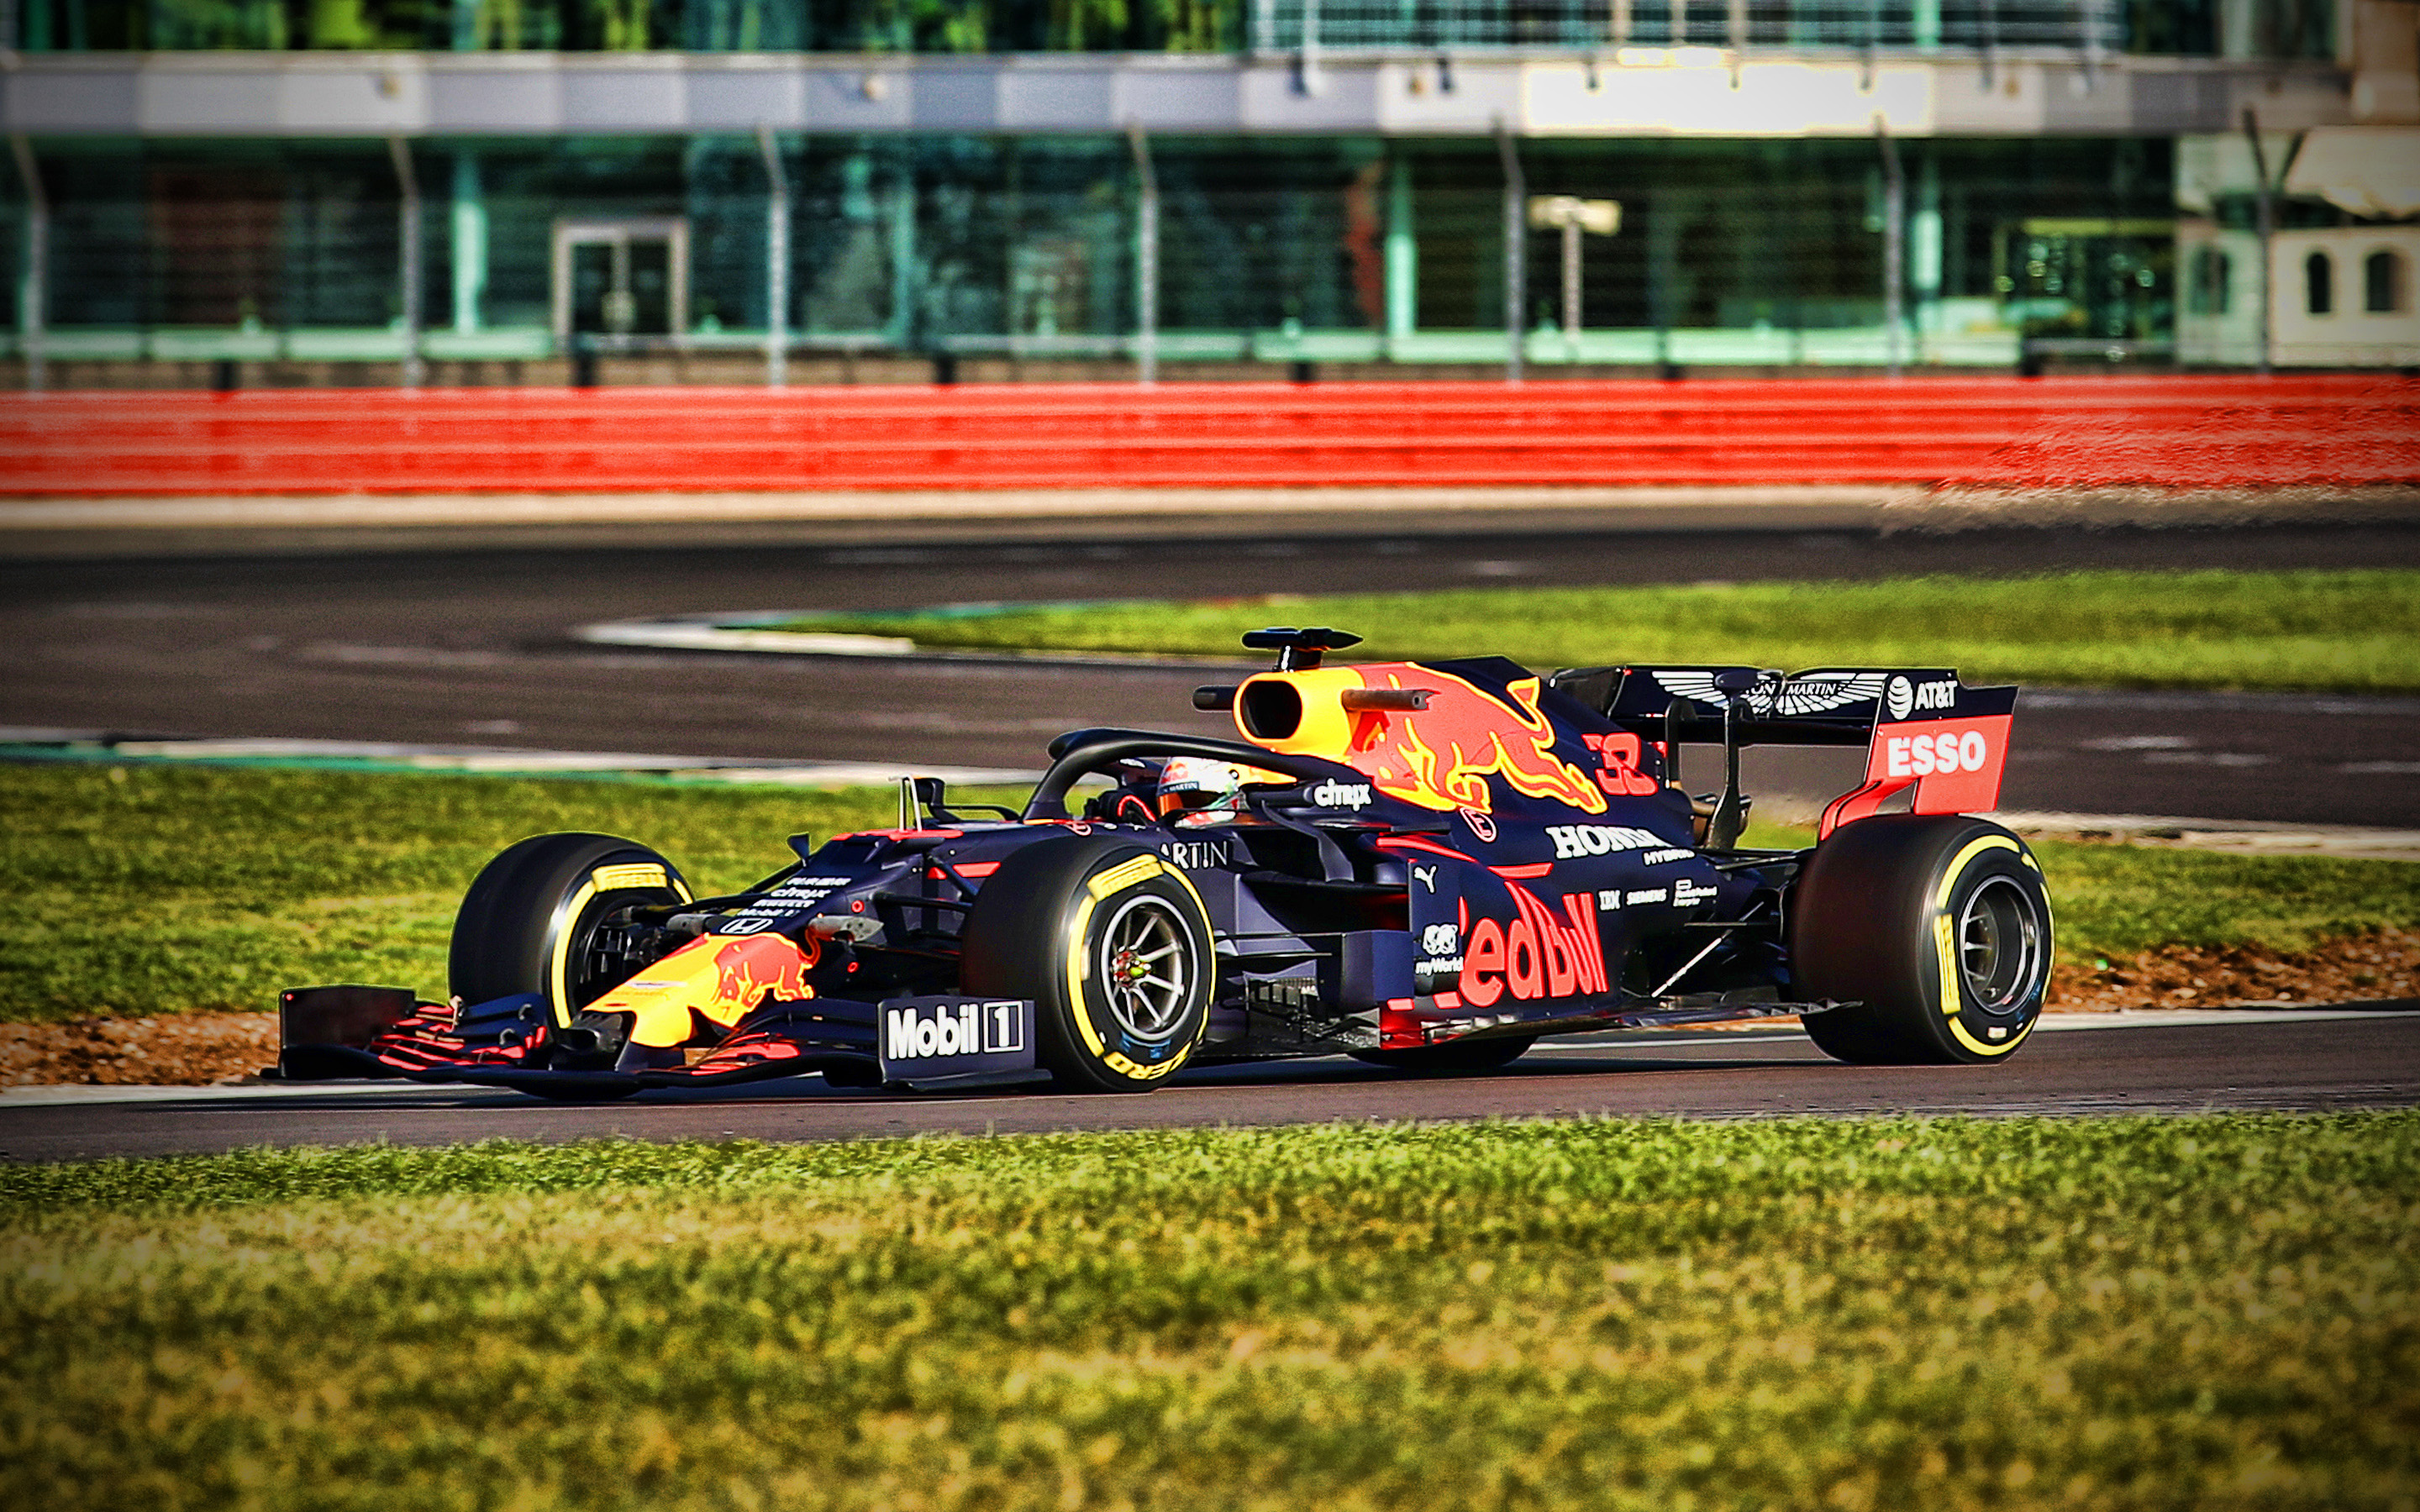 Download wallpaper 4k, Max Verstappen, raceway, Red Bull RB 2020 F1 cars, studio, Formula bokeh, Aston Martin Red Bull Racing, F1 new RB F Red Bull Racing F1 cars